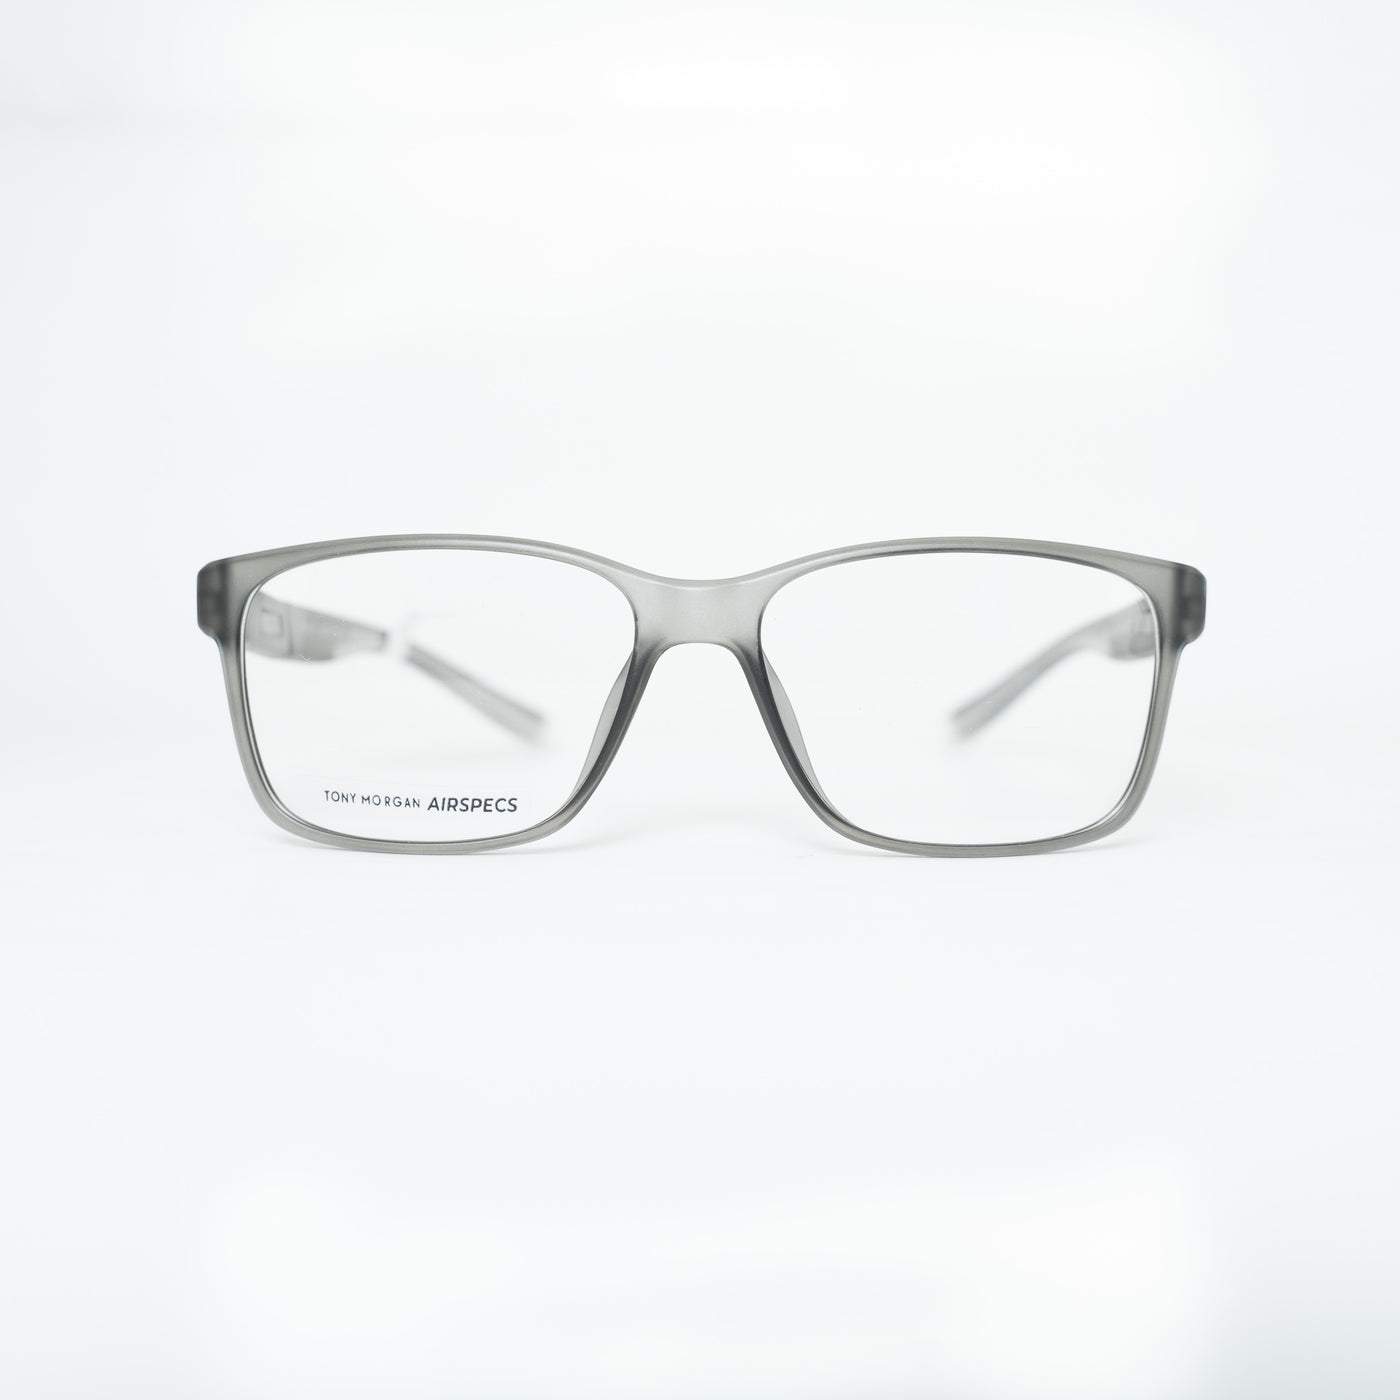 Tony Morgan TM5766AGRY54 | Eyeglasses - Vision Express Optical Philippines